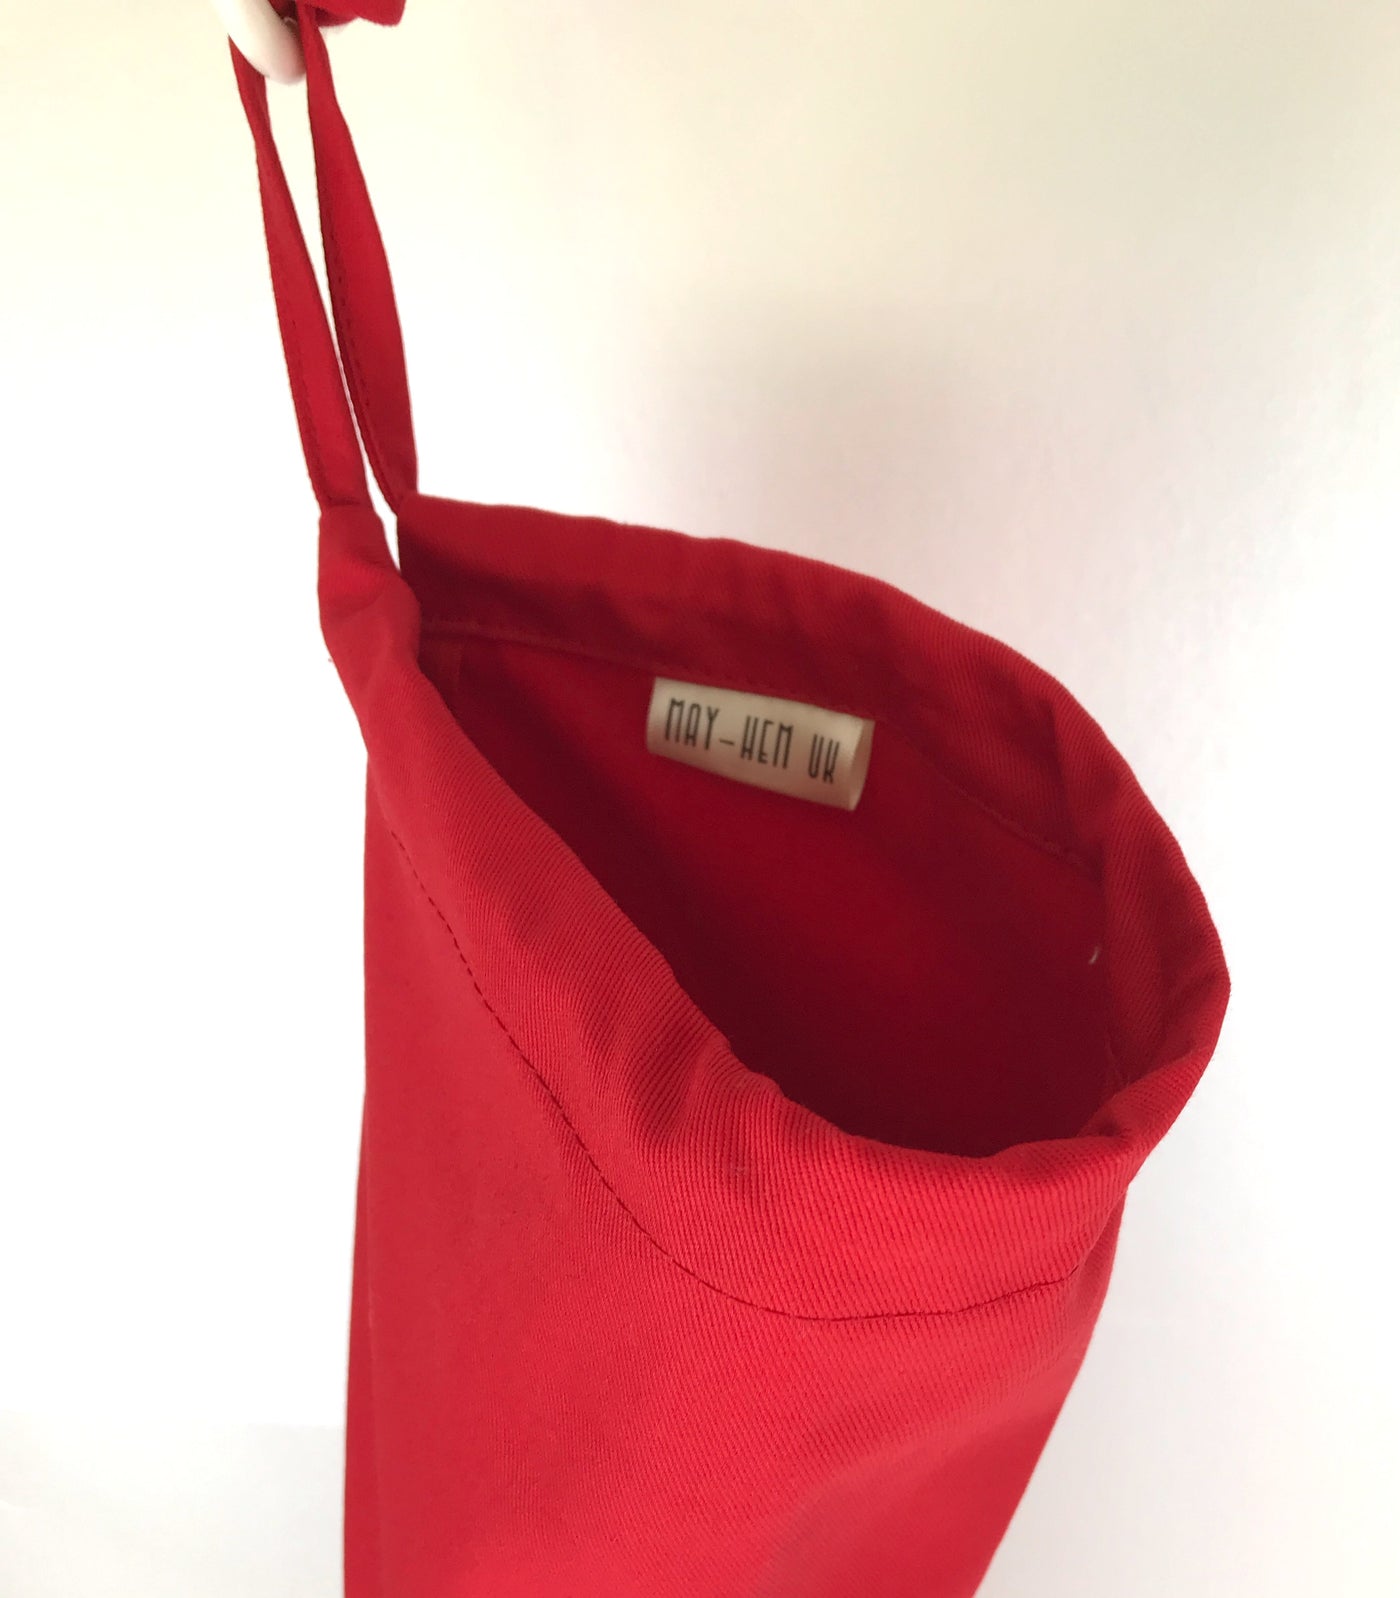 Red plastic bag holder dispenser with draw string